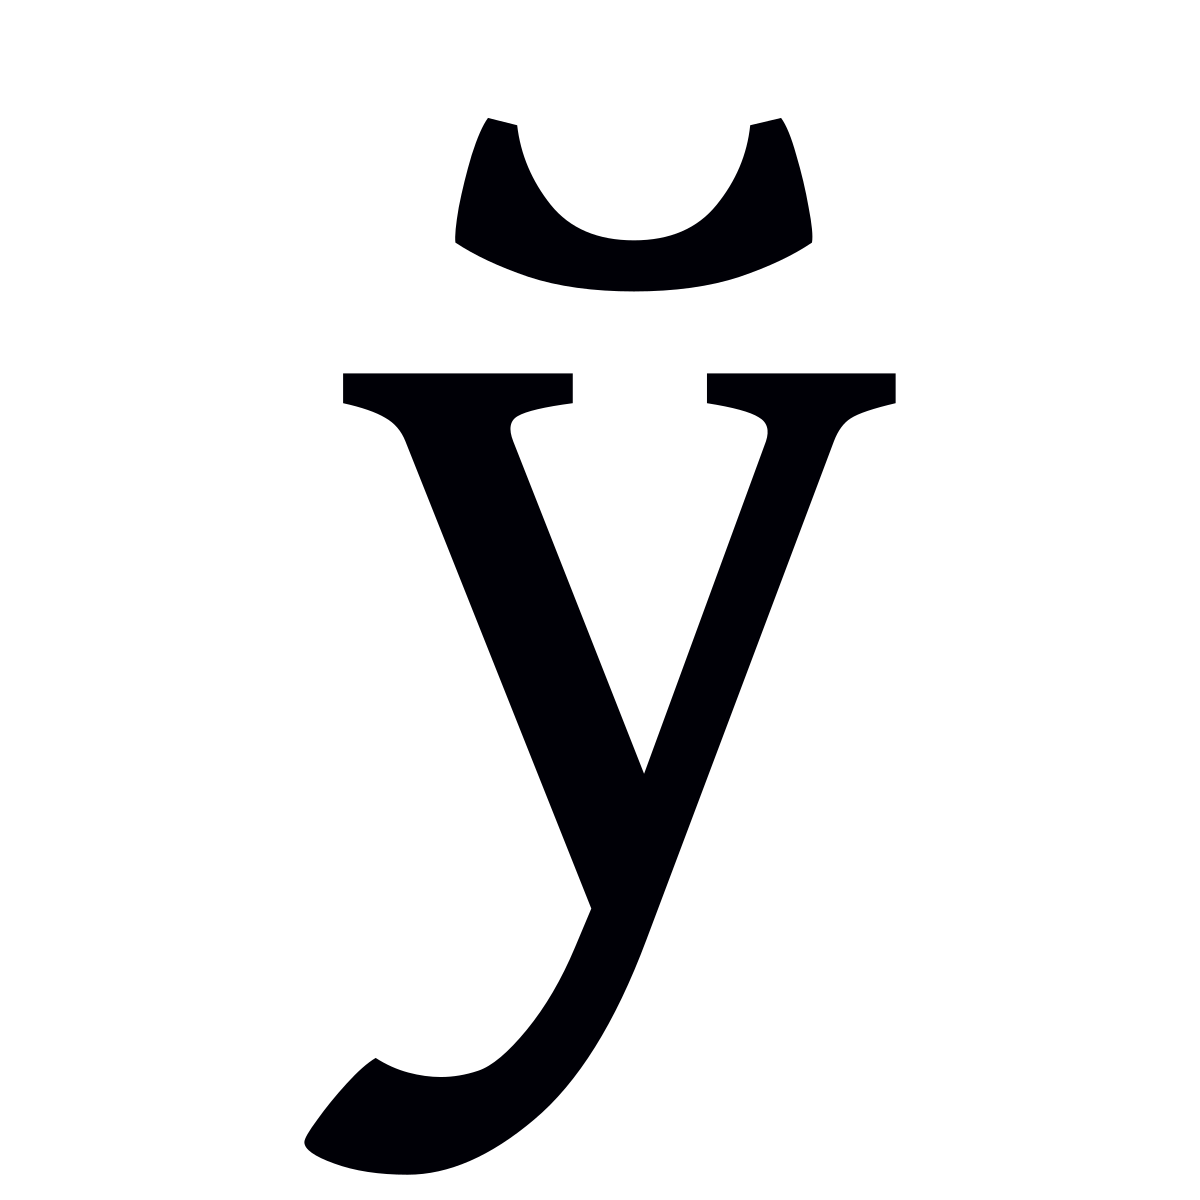 Belarusian alphabet - Wikipedia